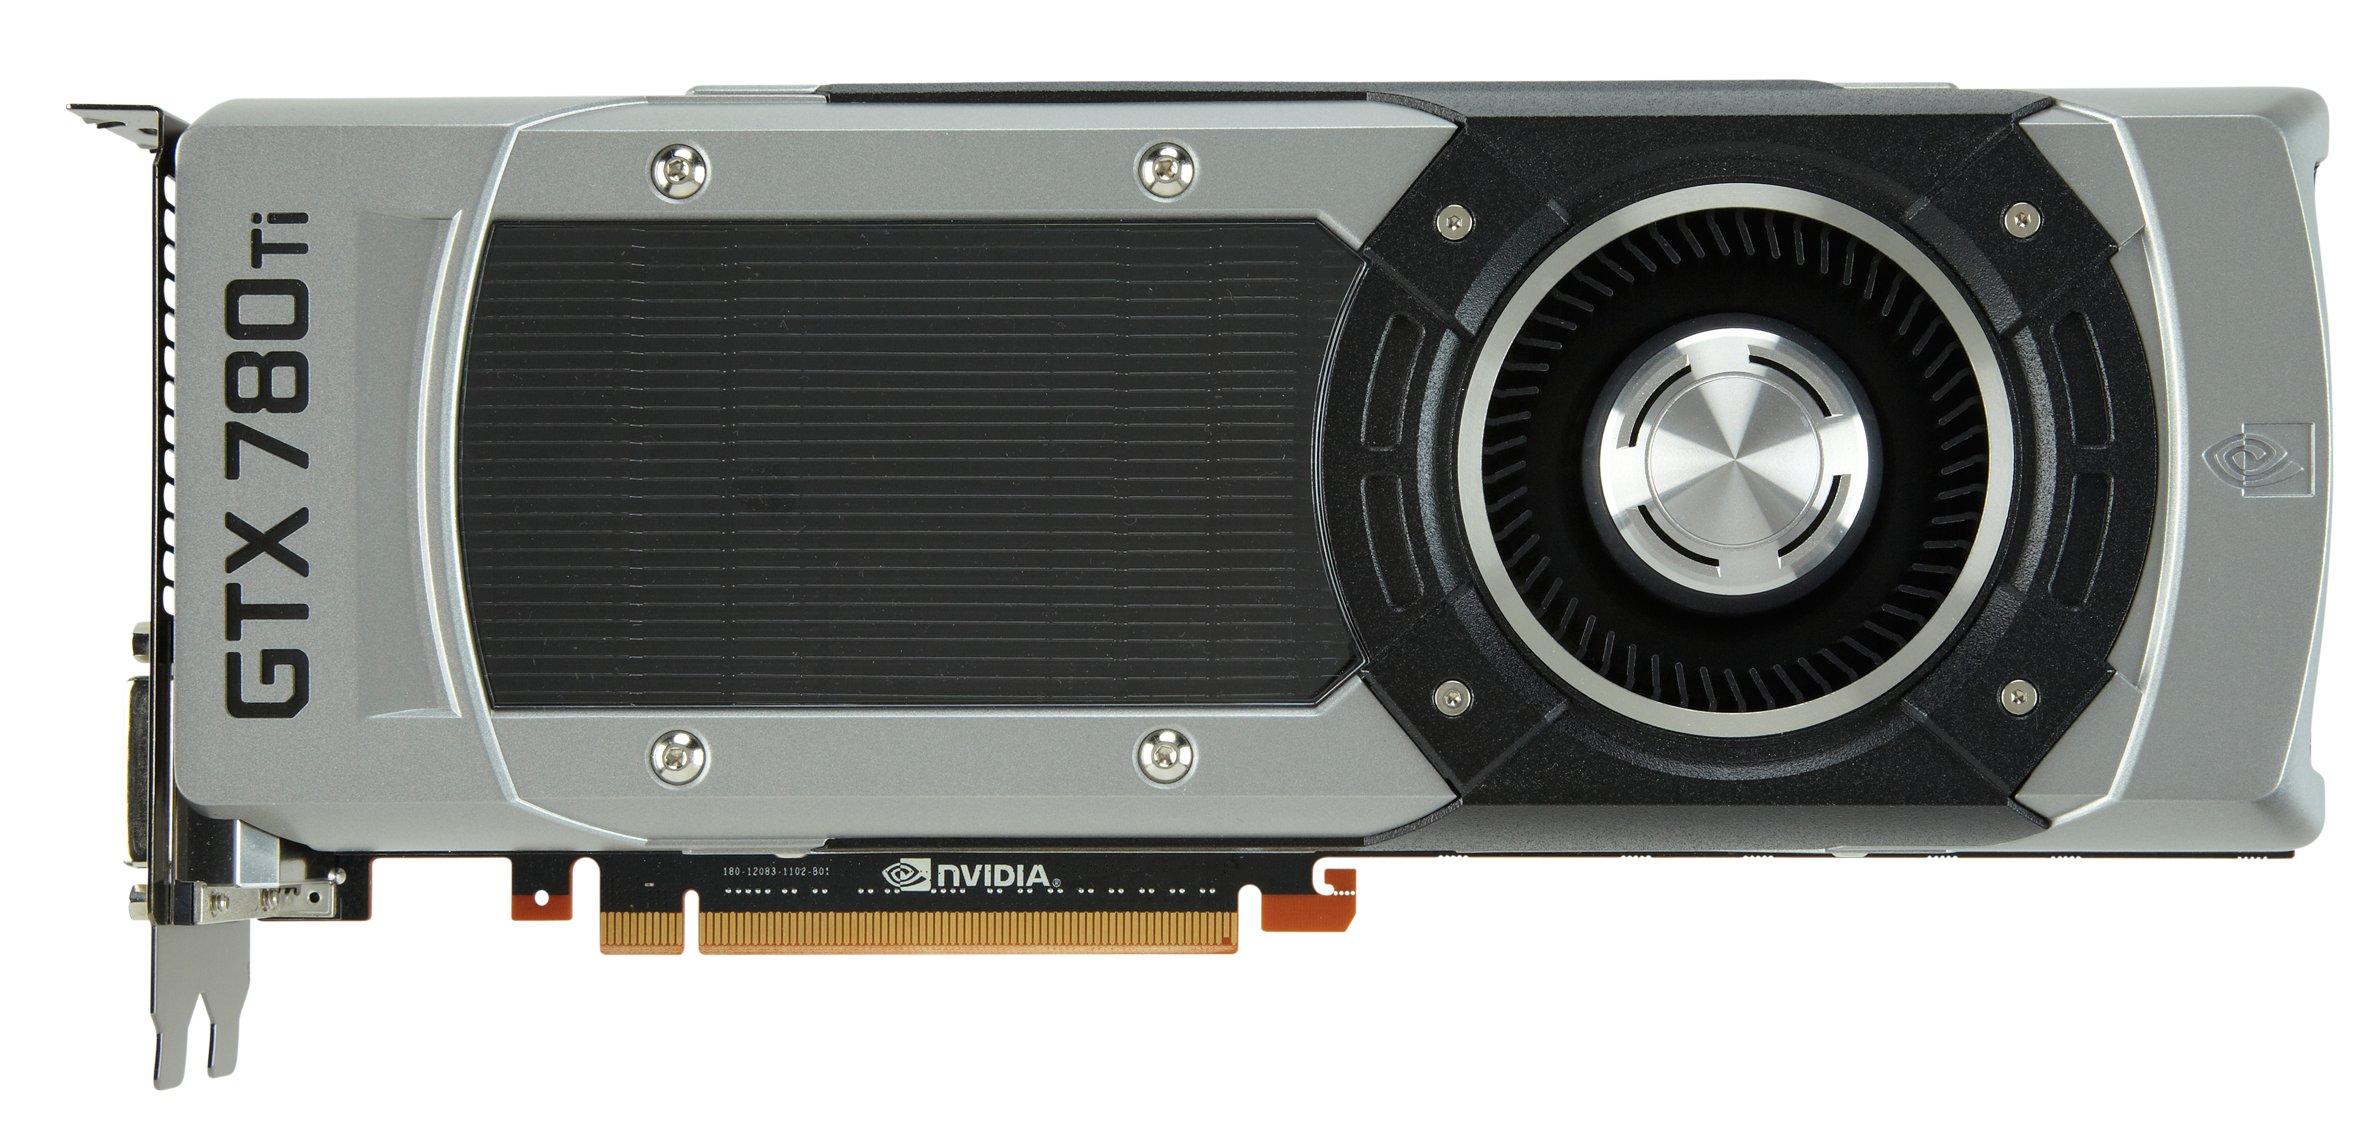 NVIDIA launches GeForce GTX 780 Ti | VideoCardz.com